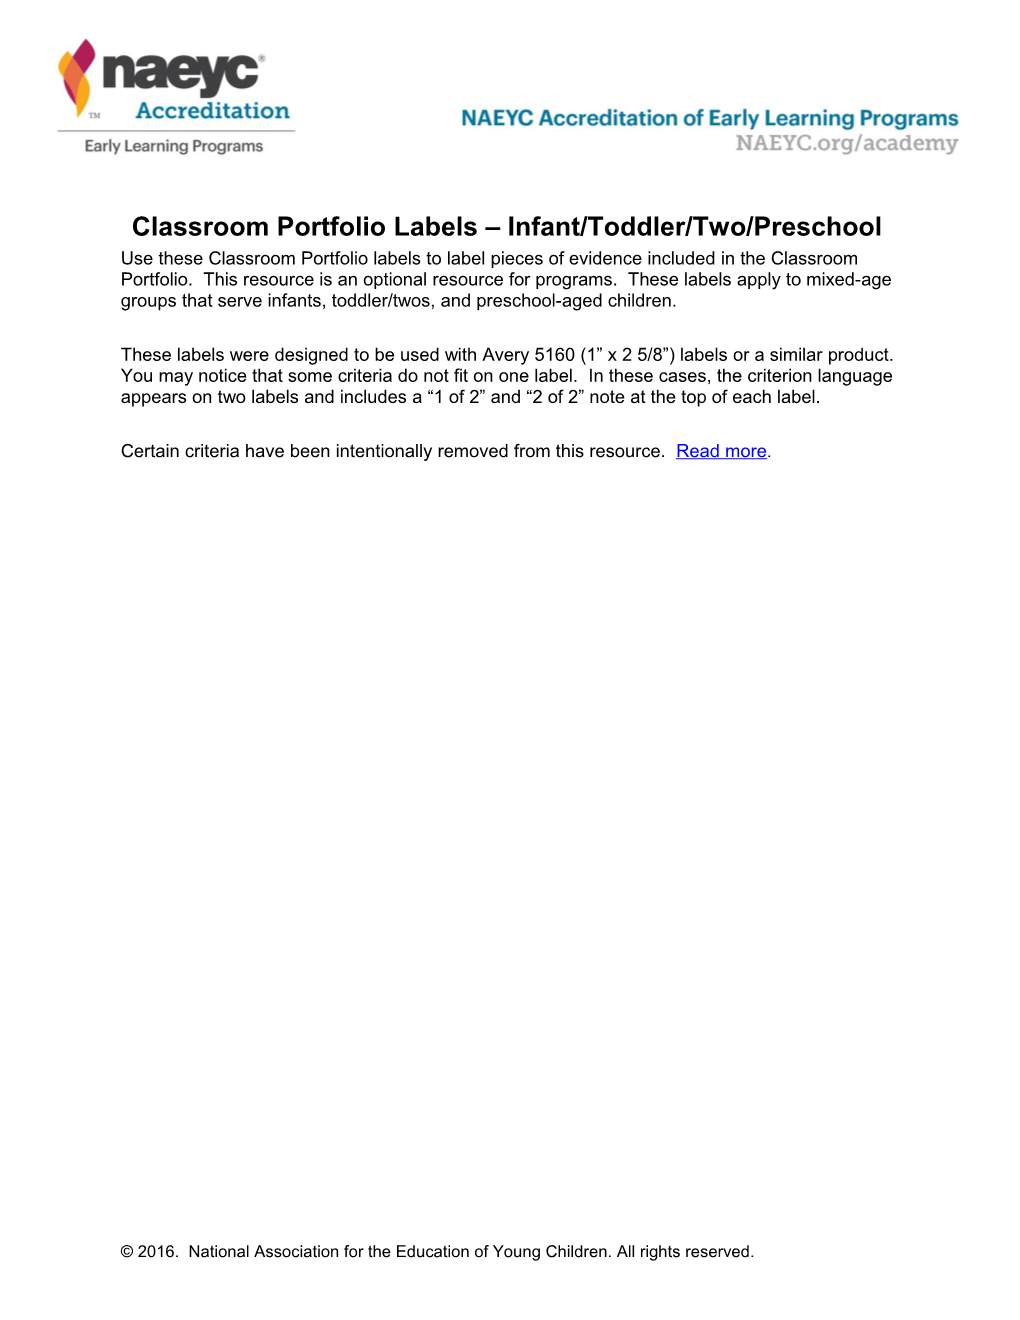 Classroom Portfolio Labels Infant/Toddler/Two/Preschool